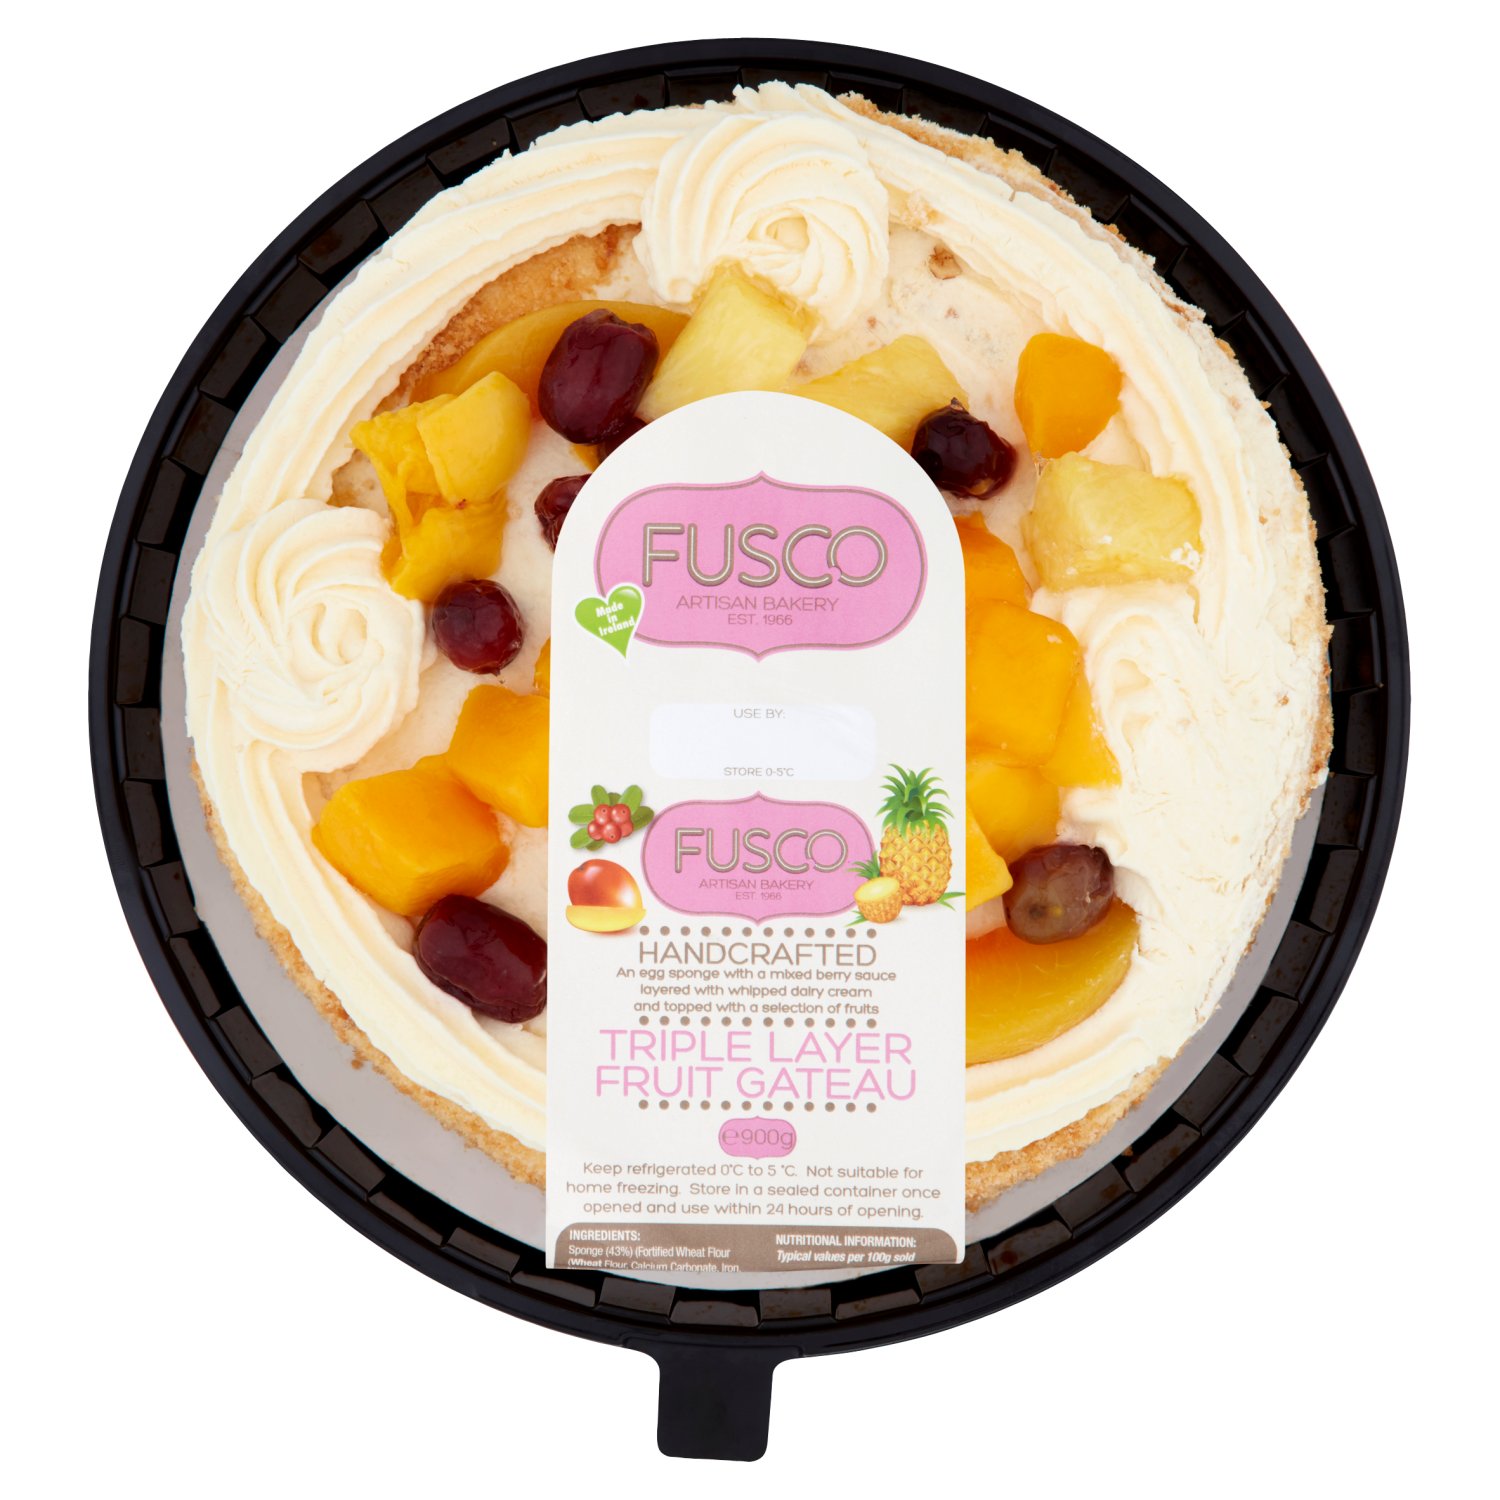 Fusco Triple Layer Fruit Gateau (900 g)